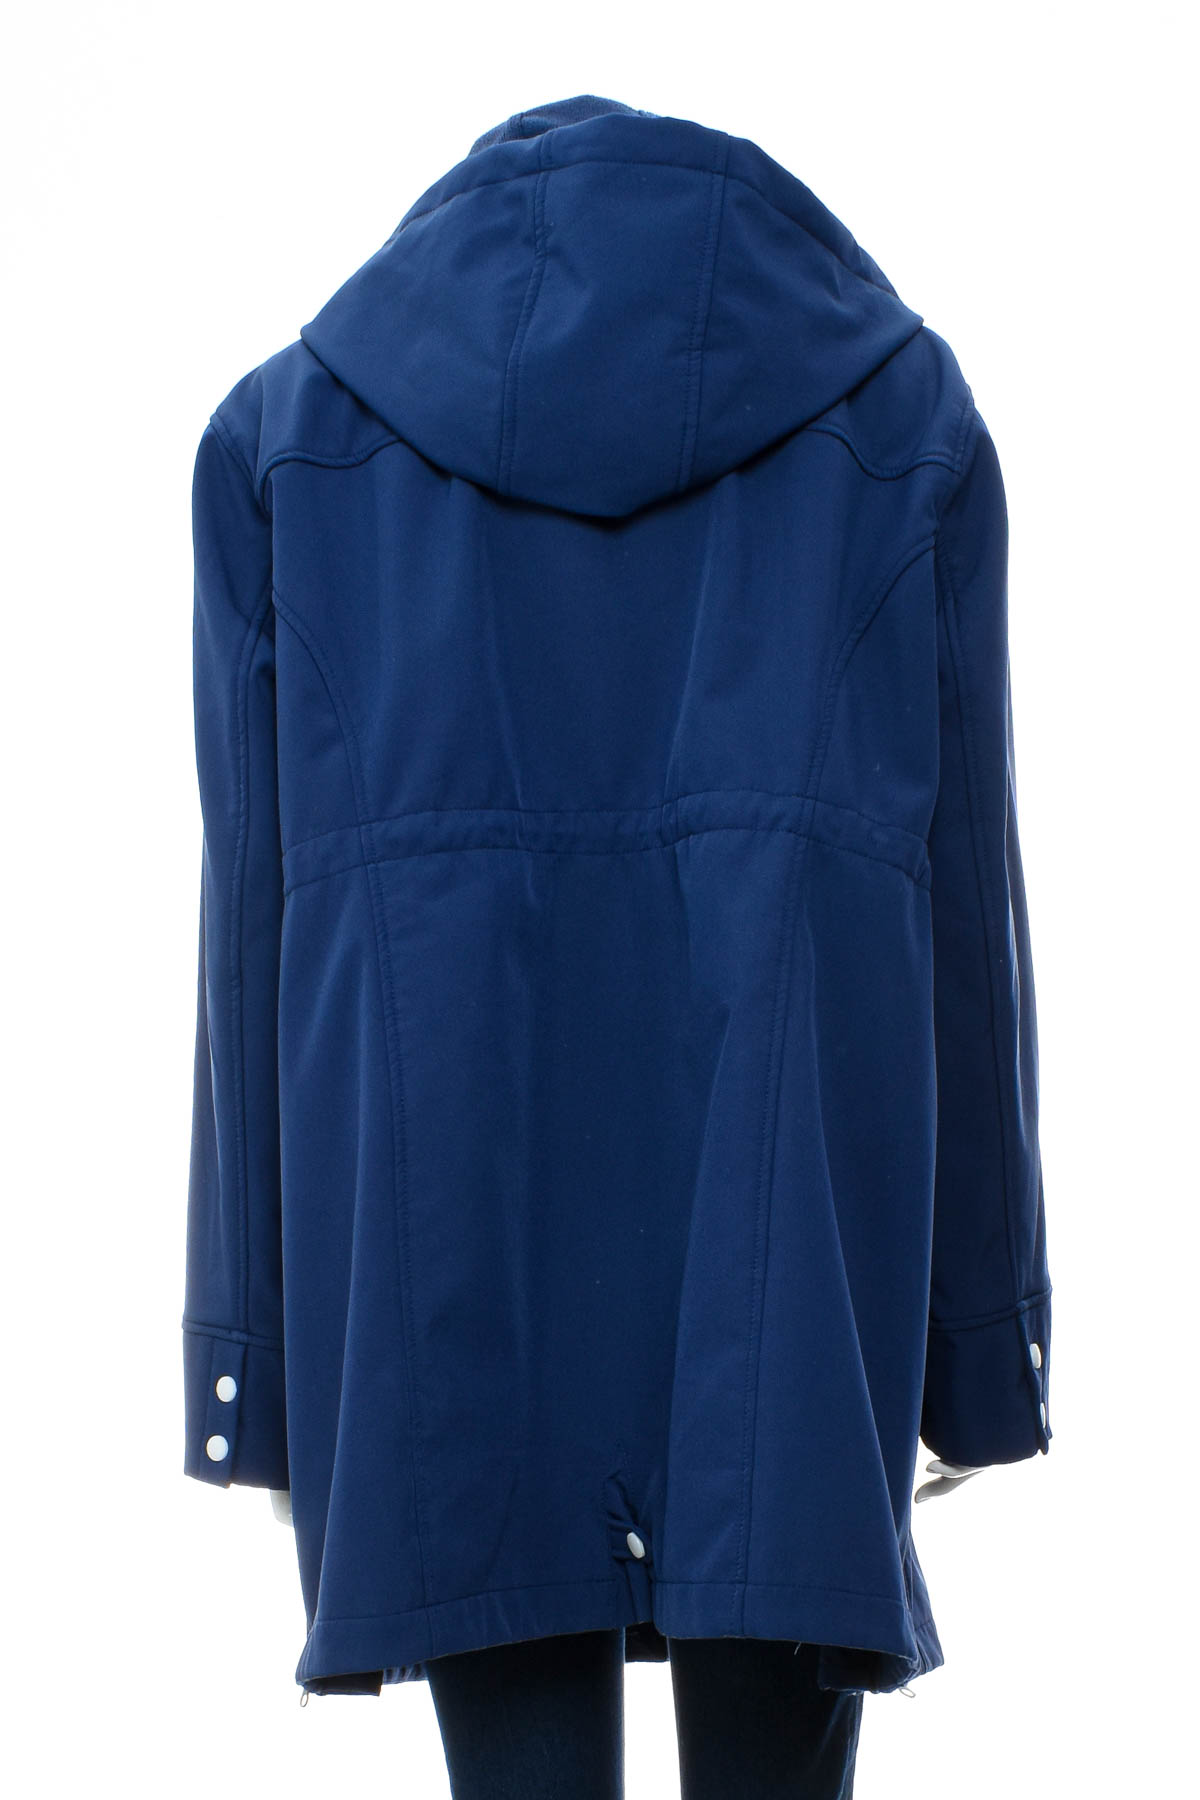 Female jacket for pregnant women - Bpc Bonprix Collection - 1